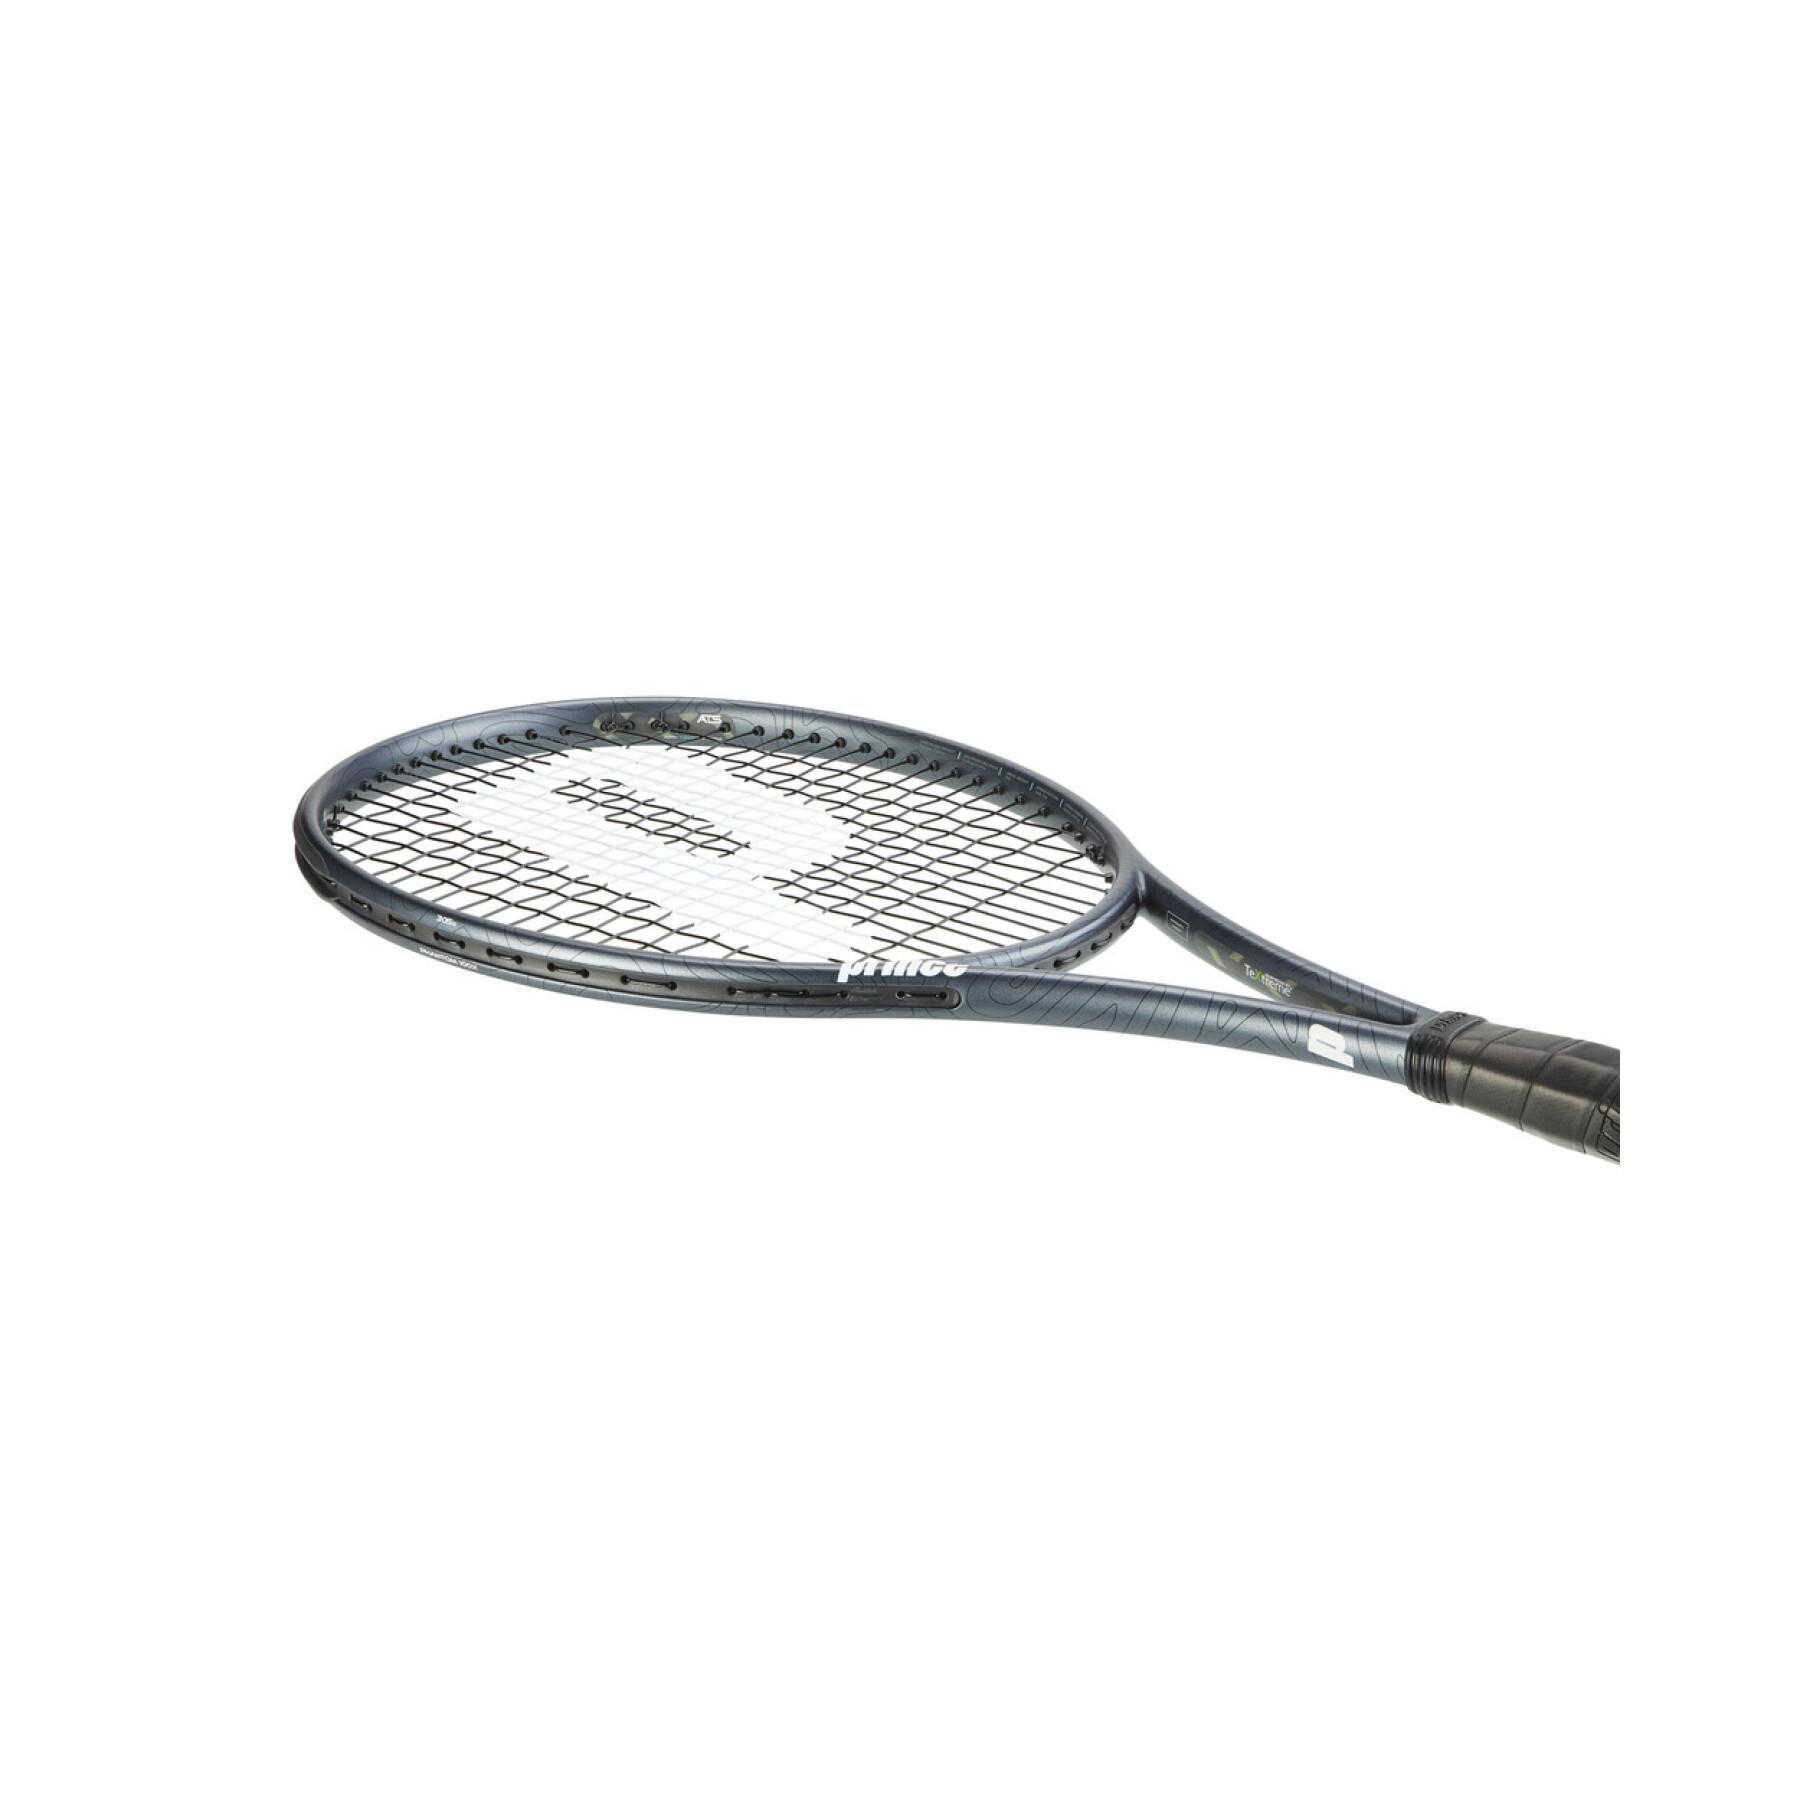 Tennis racket Prince phantom 100x (305gr)